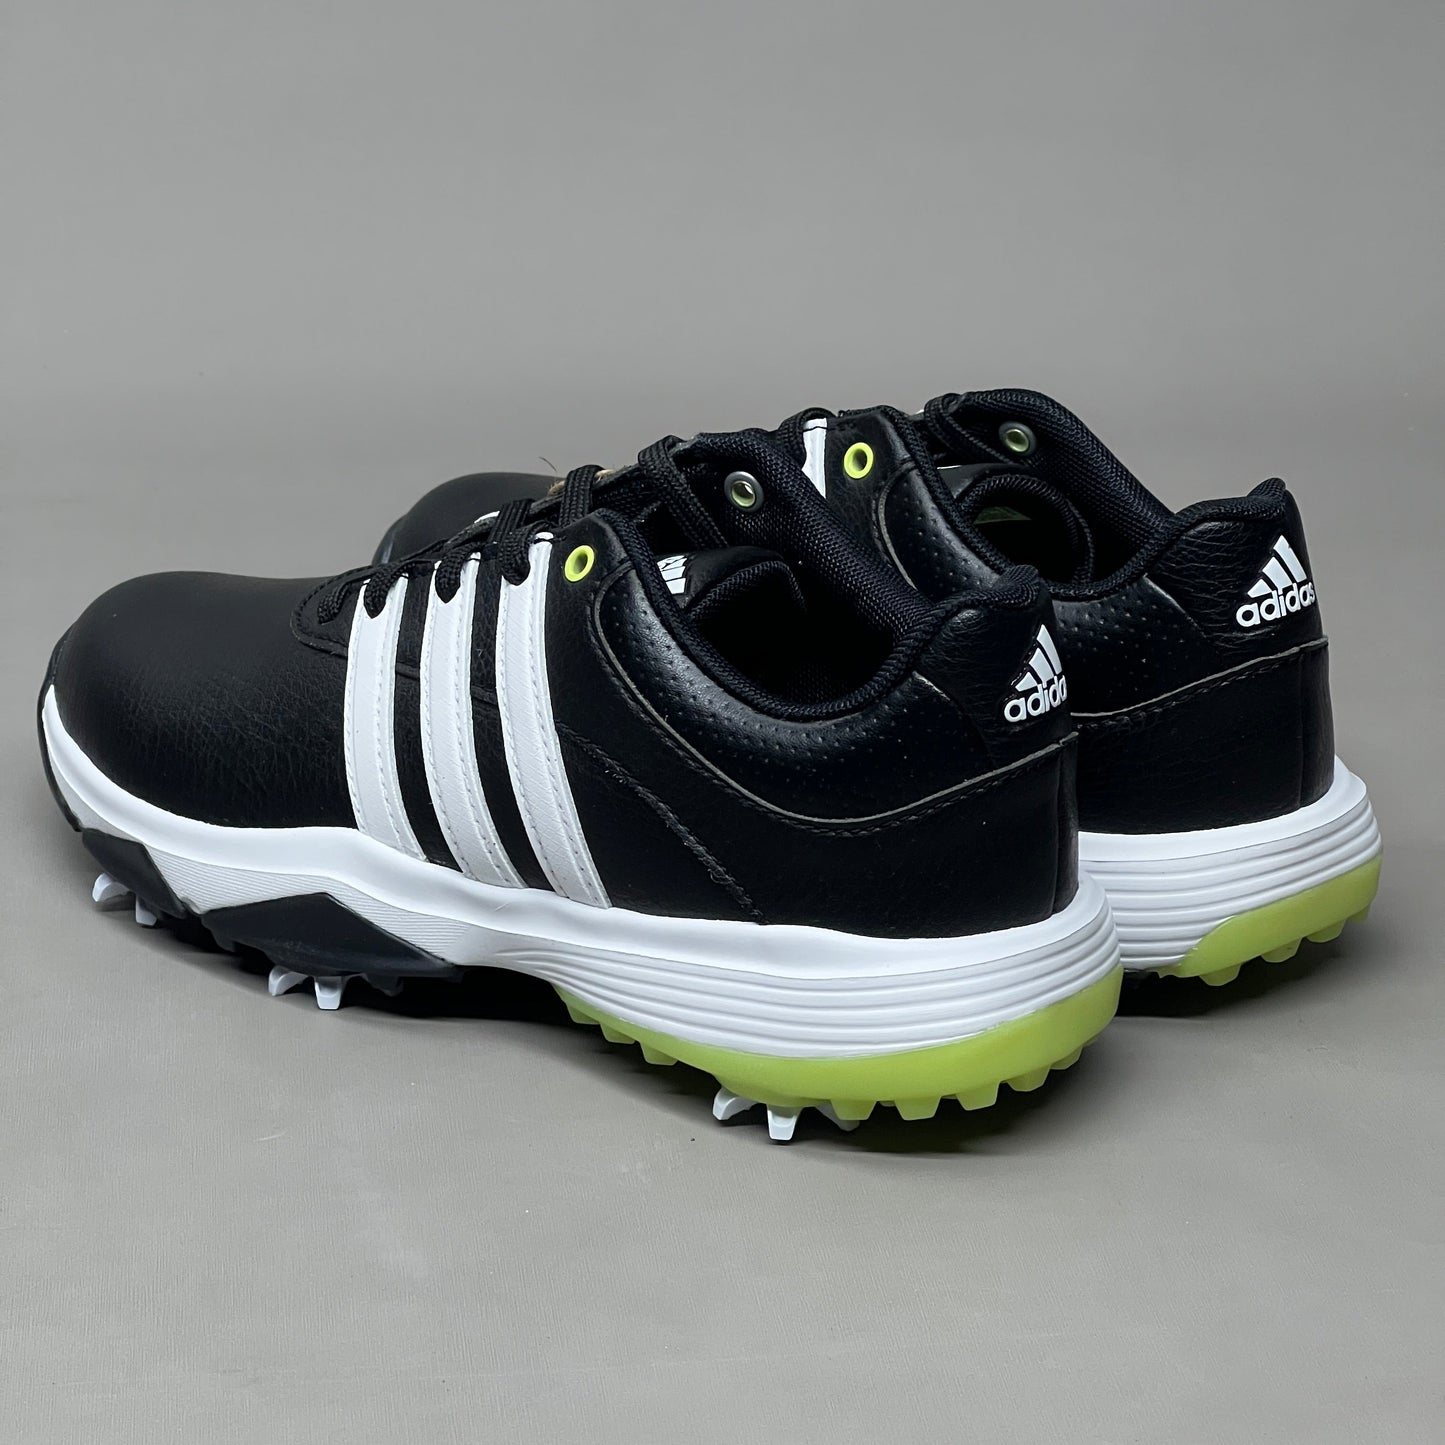 ADIDAS Golf Shoes JR Tour360 22 Youth Sz 3.5 Black / White / Lime GV9666 (New)